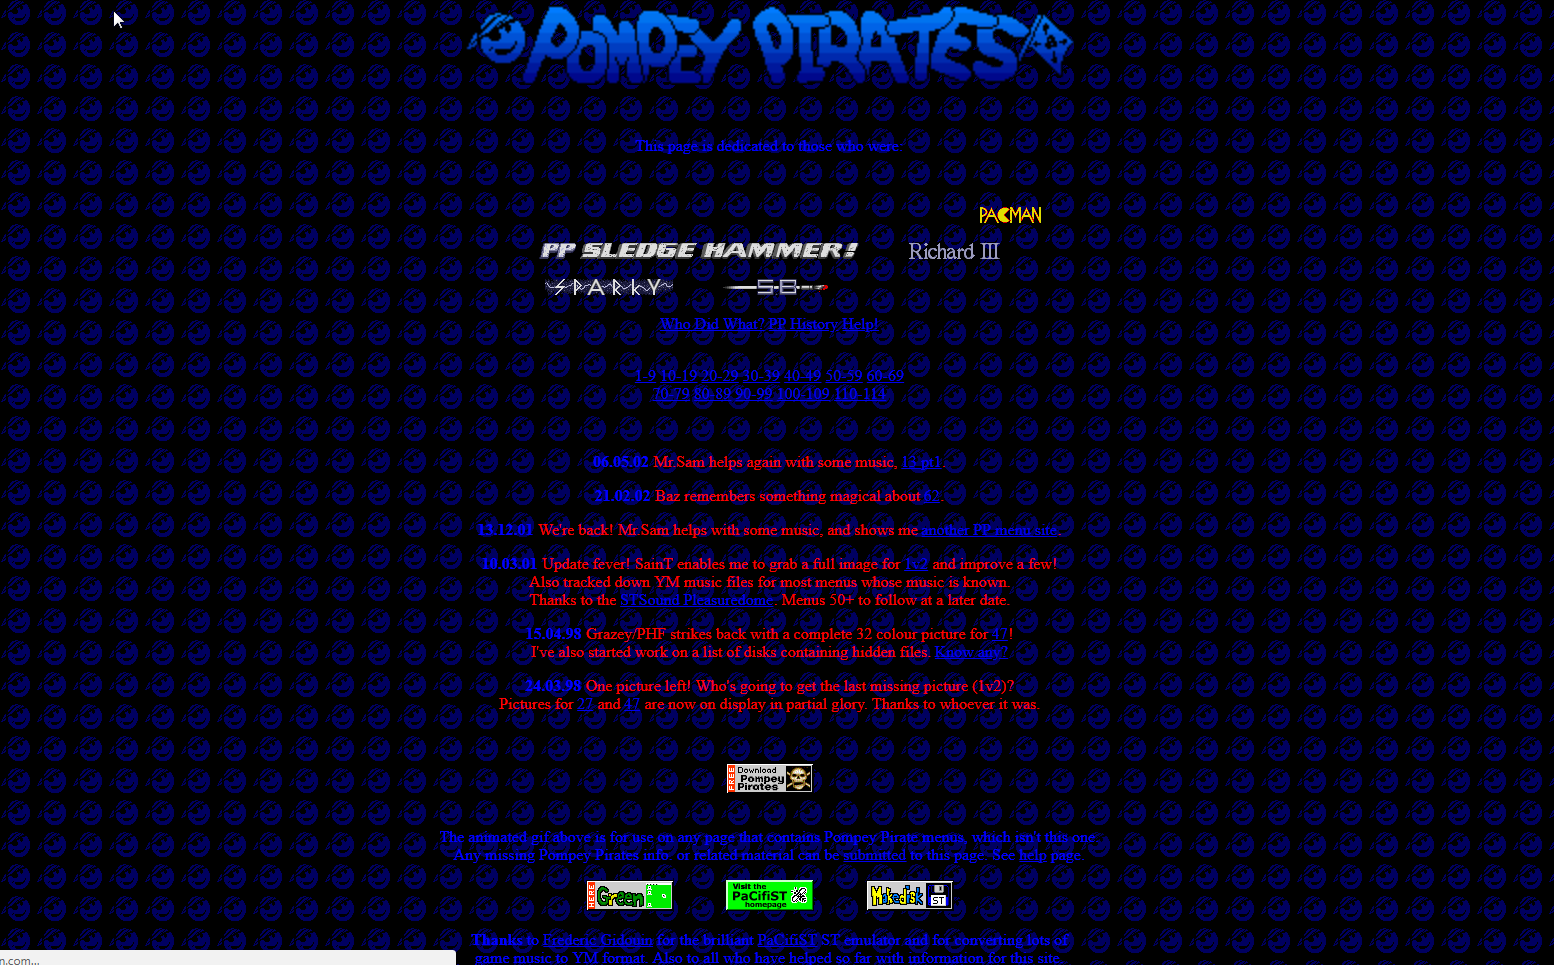 Screenshot of website Pompey Pirates